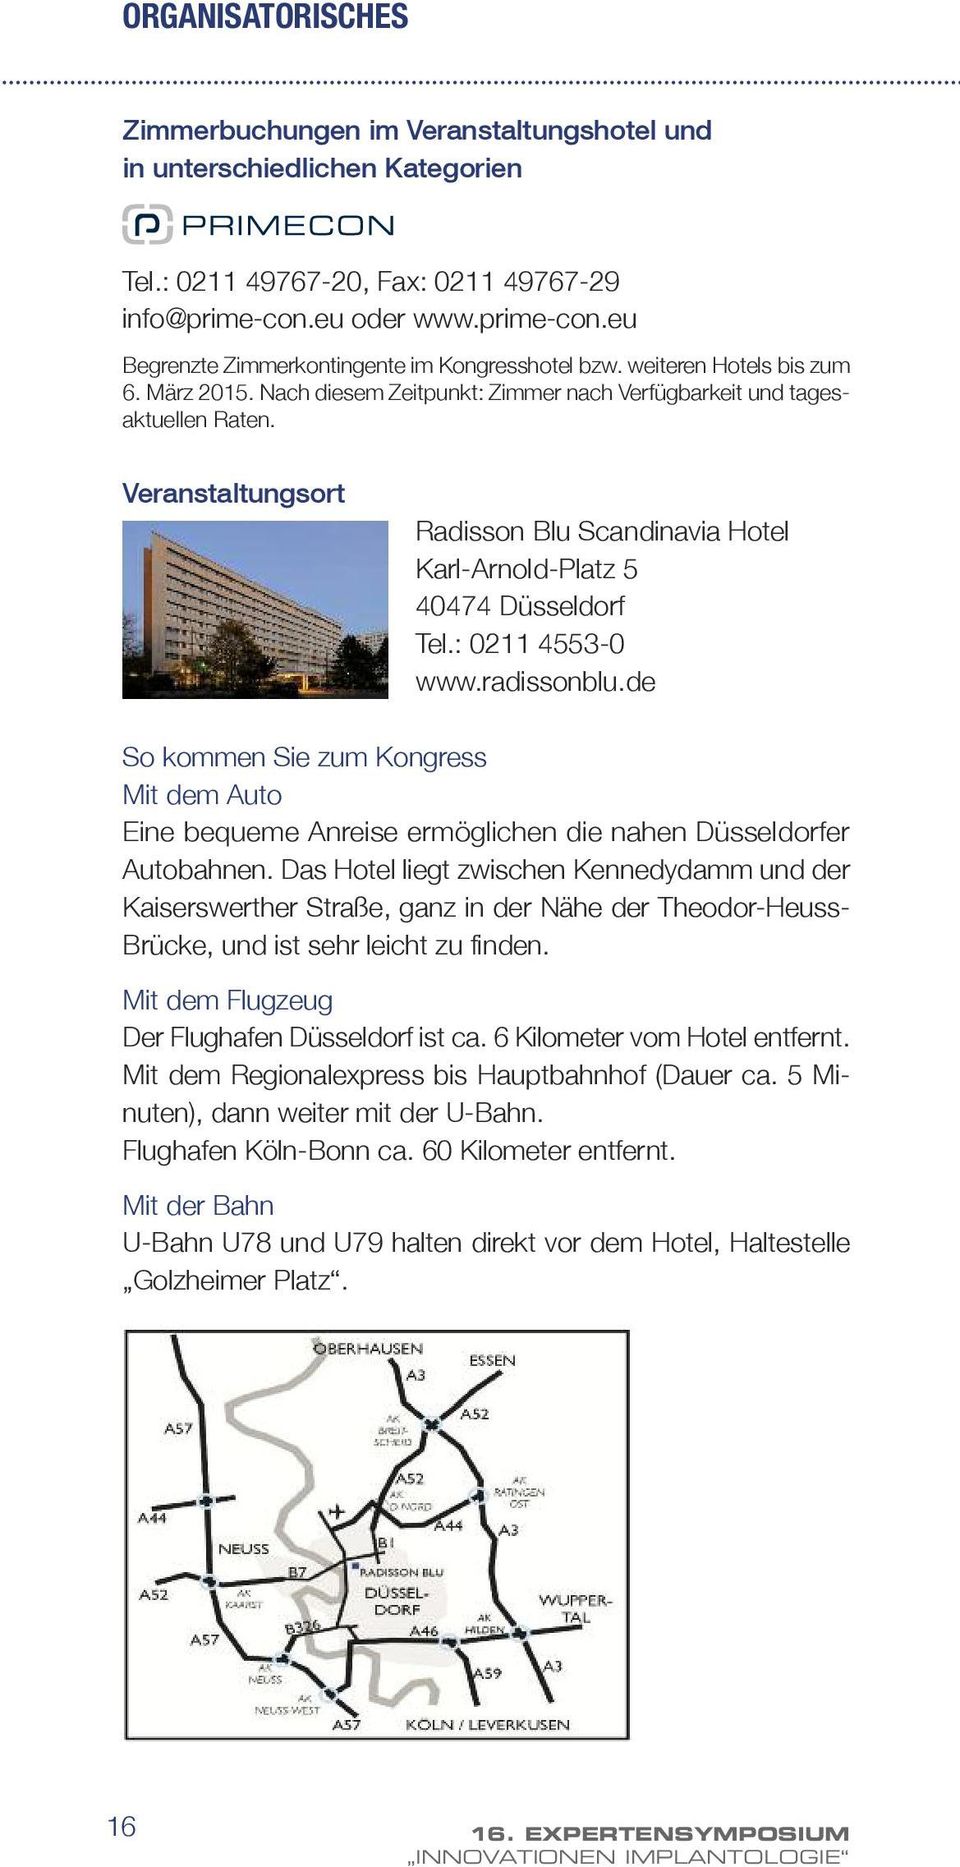 Veranstaltungsort Radisson Blu Scandinavia Hotel Karl-Arnold-Platz 5 40474 Düsseldorf Tel.: 0211 4553-0 www.radissonblu.